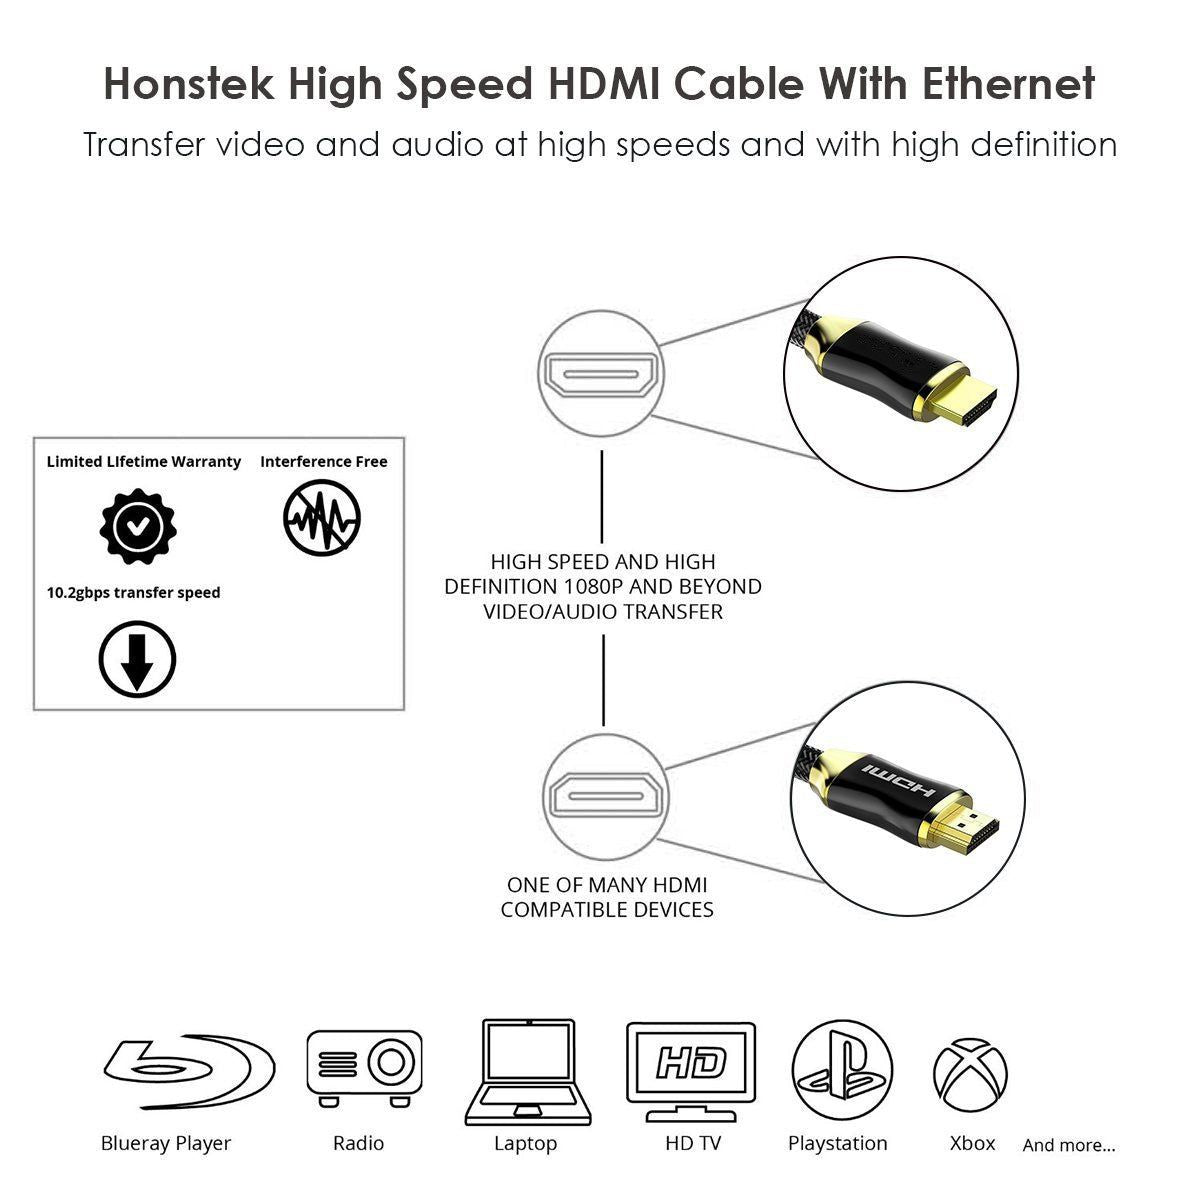 0.5m 28AWG 4K HDMI 2.0 Cable Nylon Braided HDMI Cord for PS3 / HDTV / Projector - Matte Black - UNIQKART